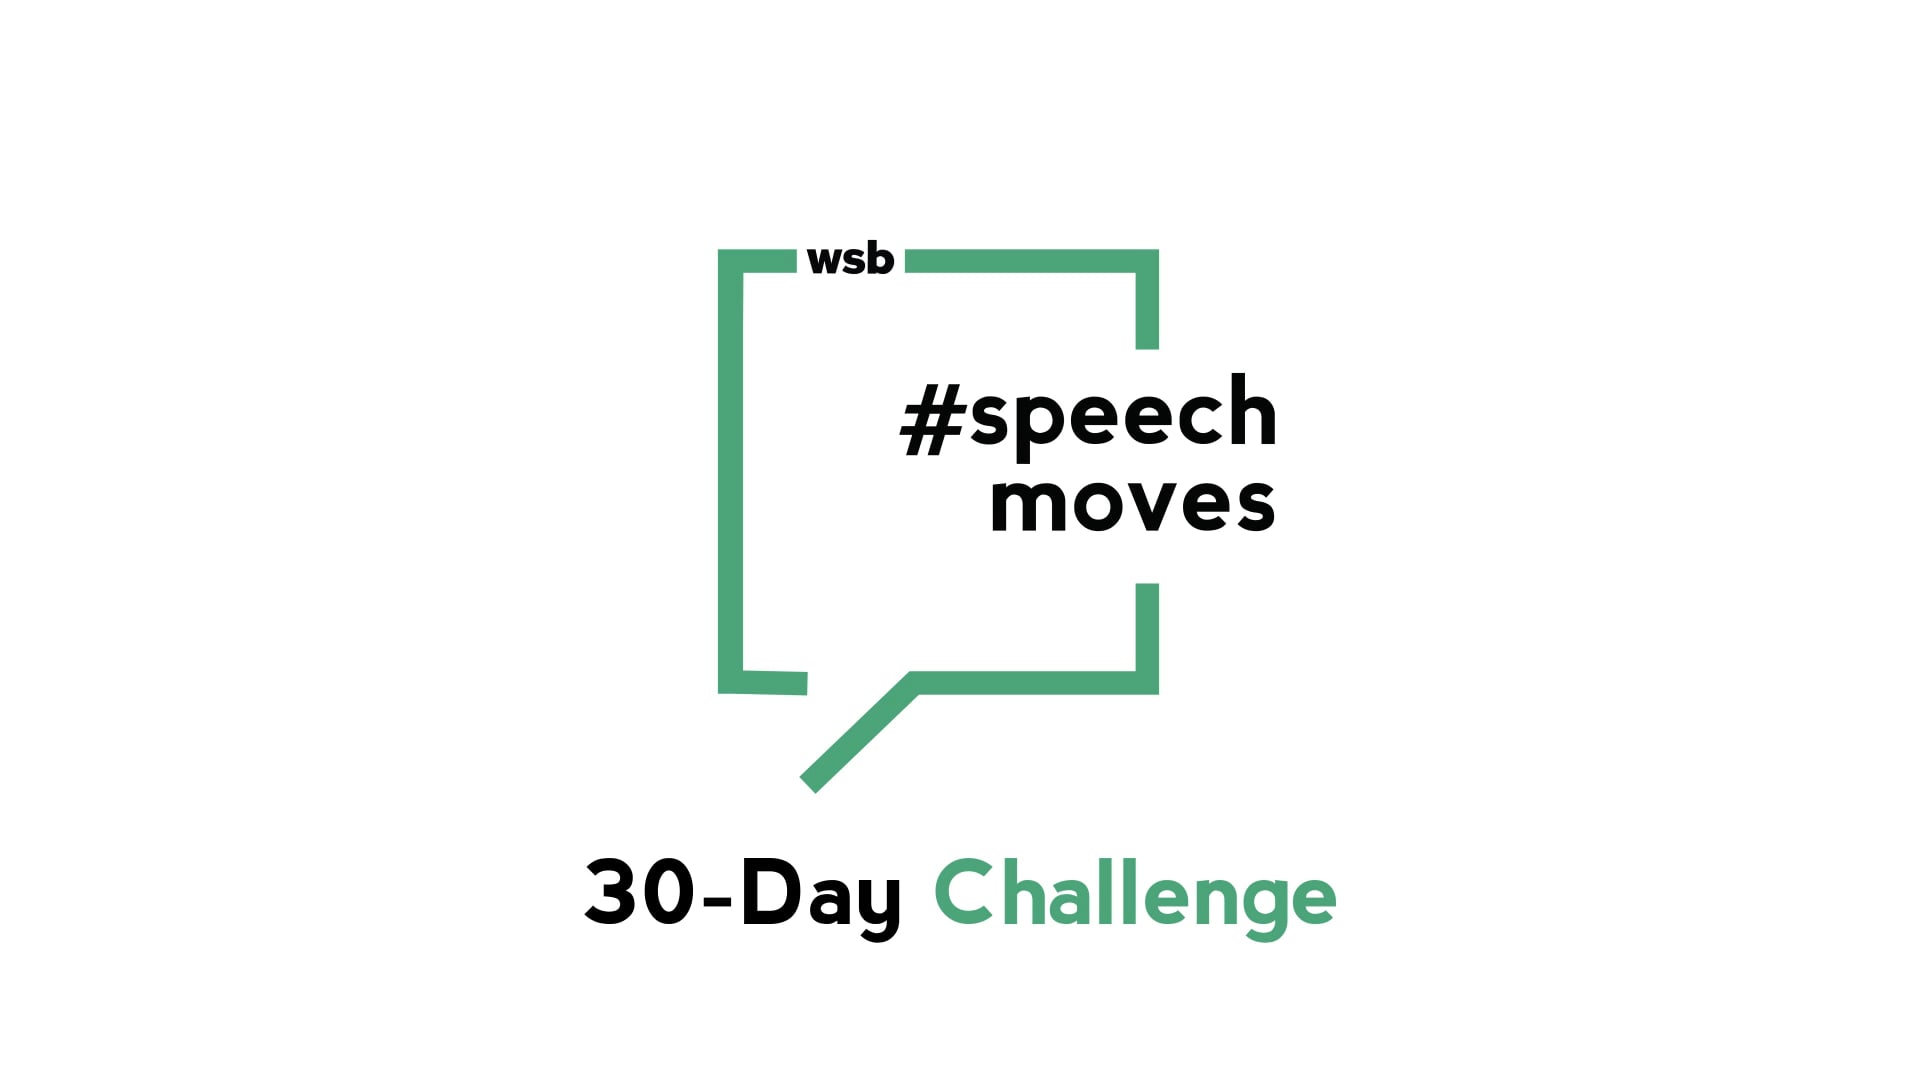 30-Day Challenge Explainer Video